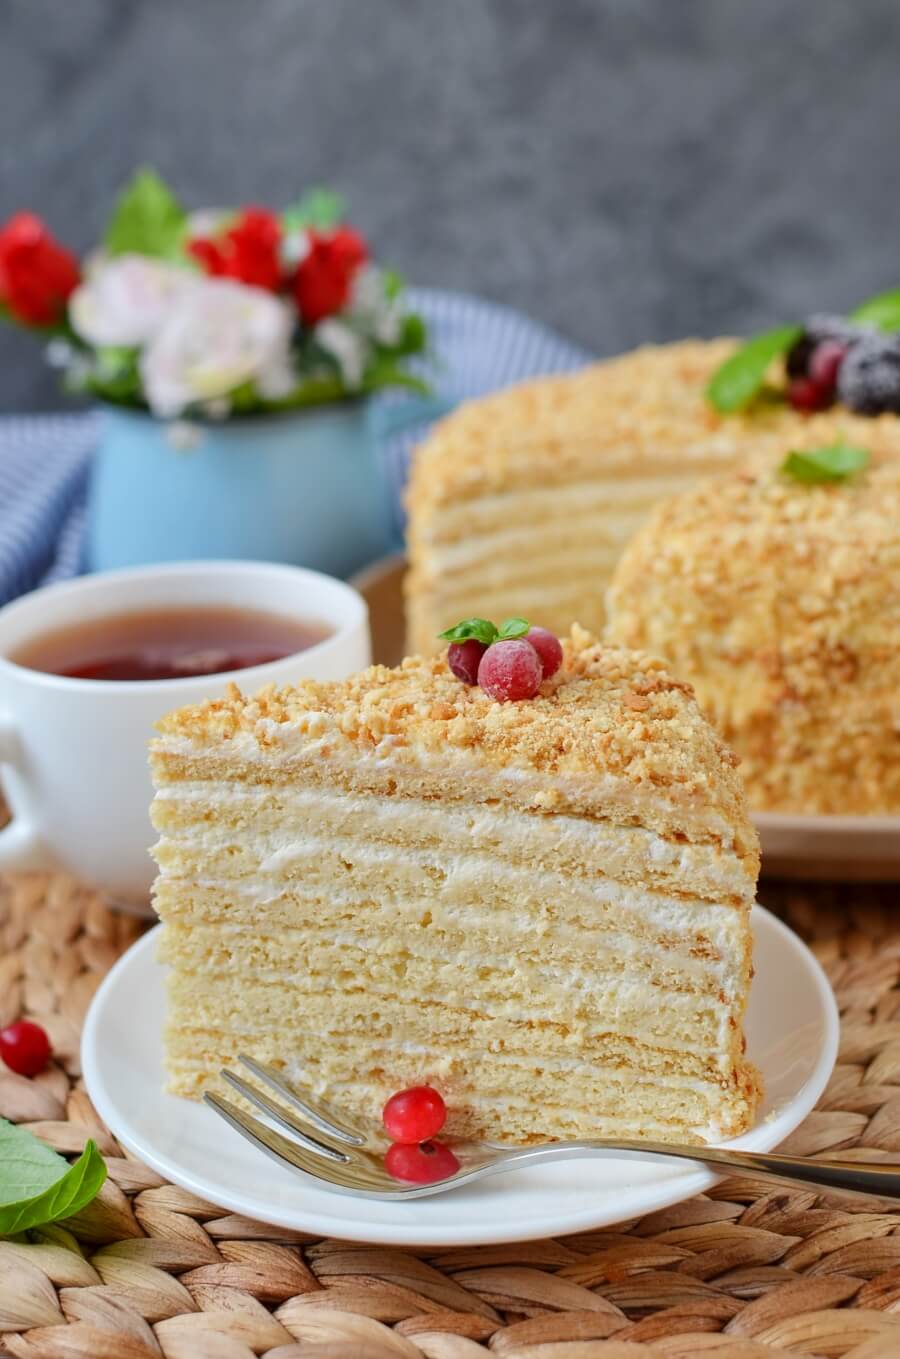 Russian Honey Cake (Medovik) Recipe - Cook.me Recipes